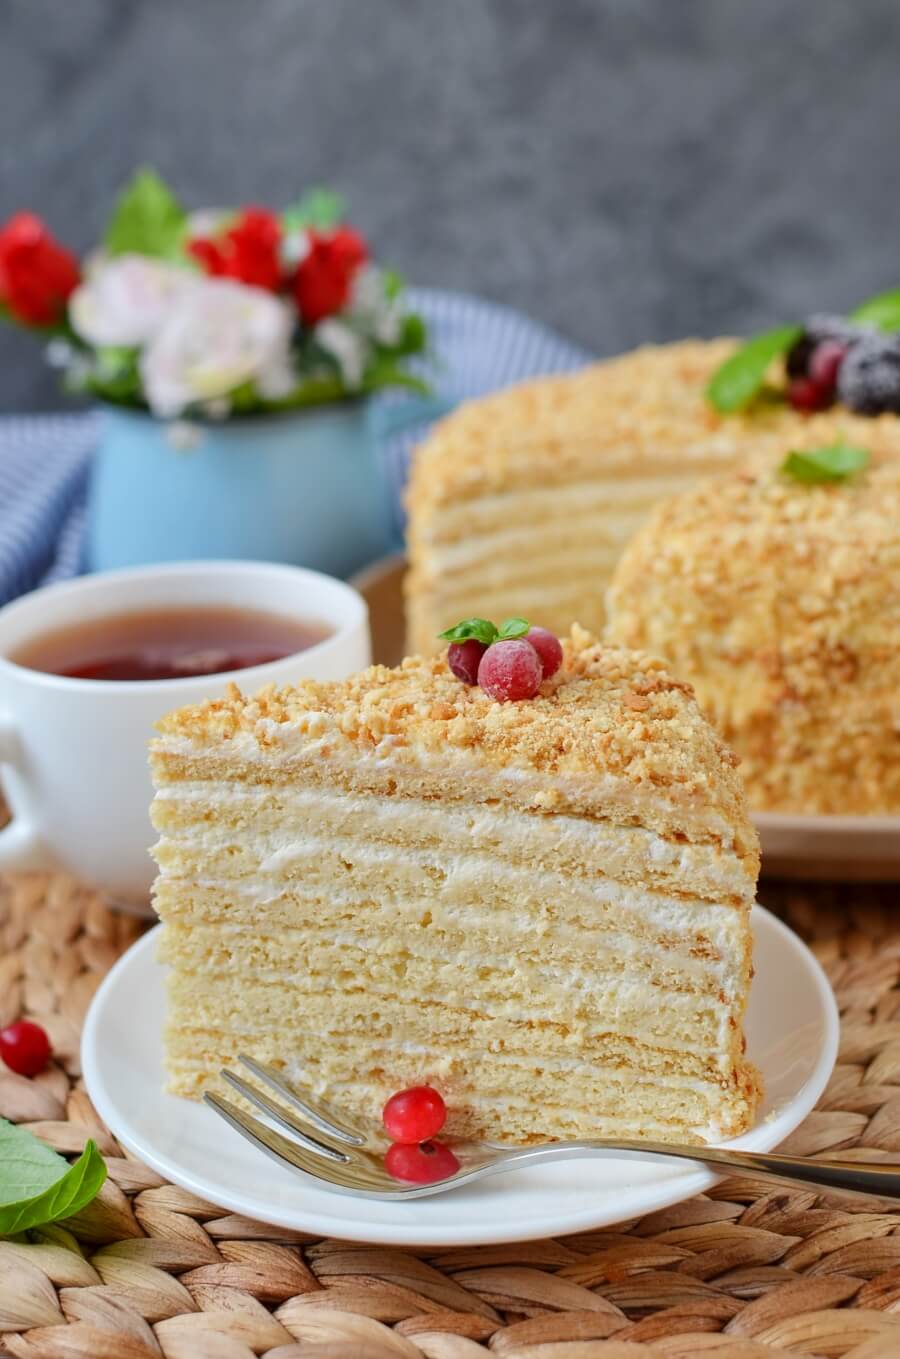 Russian Honey Cake (Medovik) Recipe - Cook.me Recipes